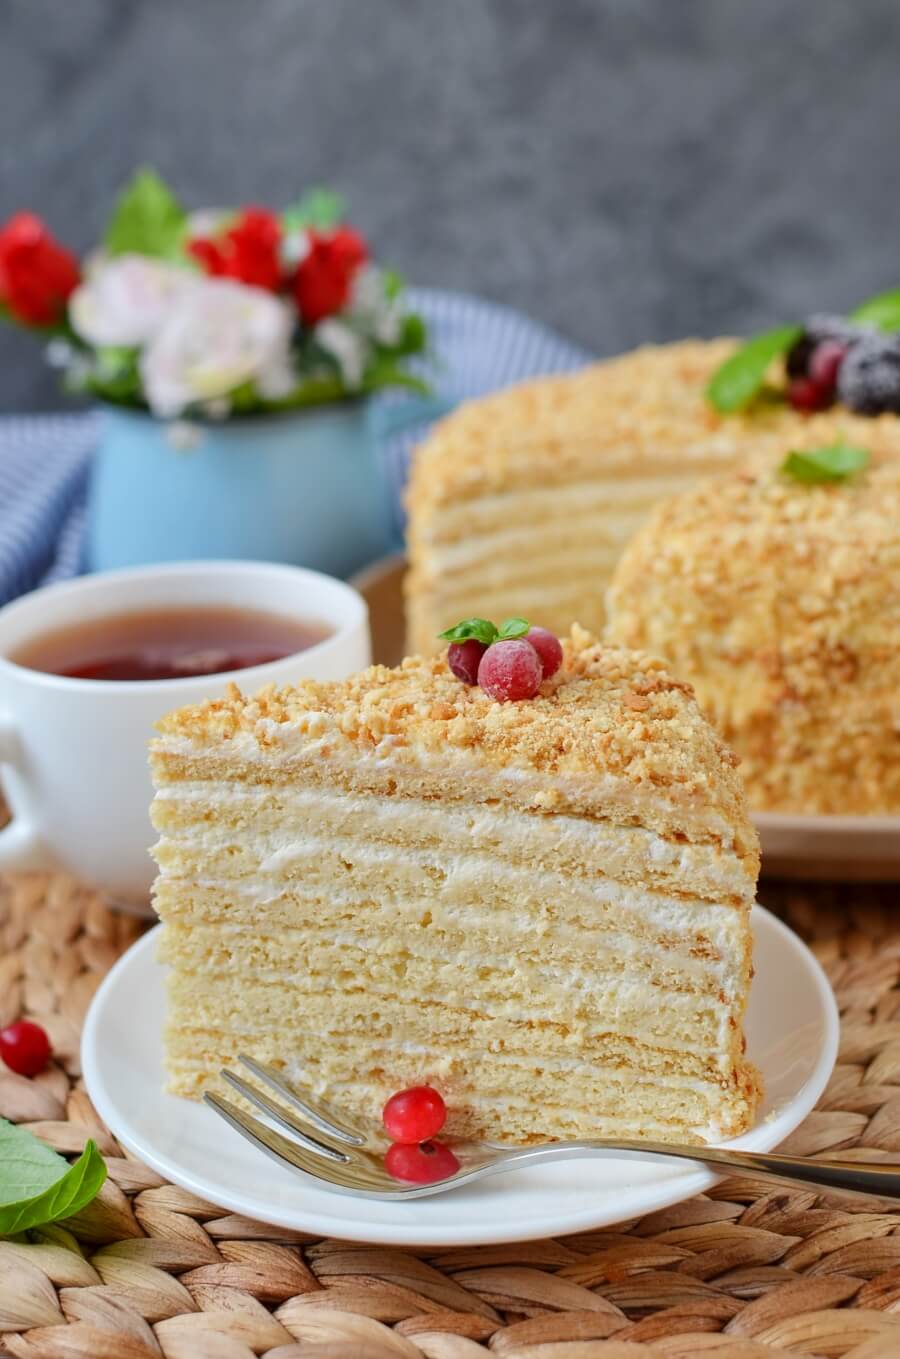 Russian Honey Cake (Medovik) Recipe - Cook.me Recipes